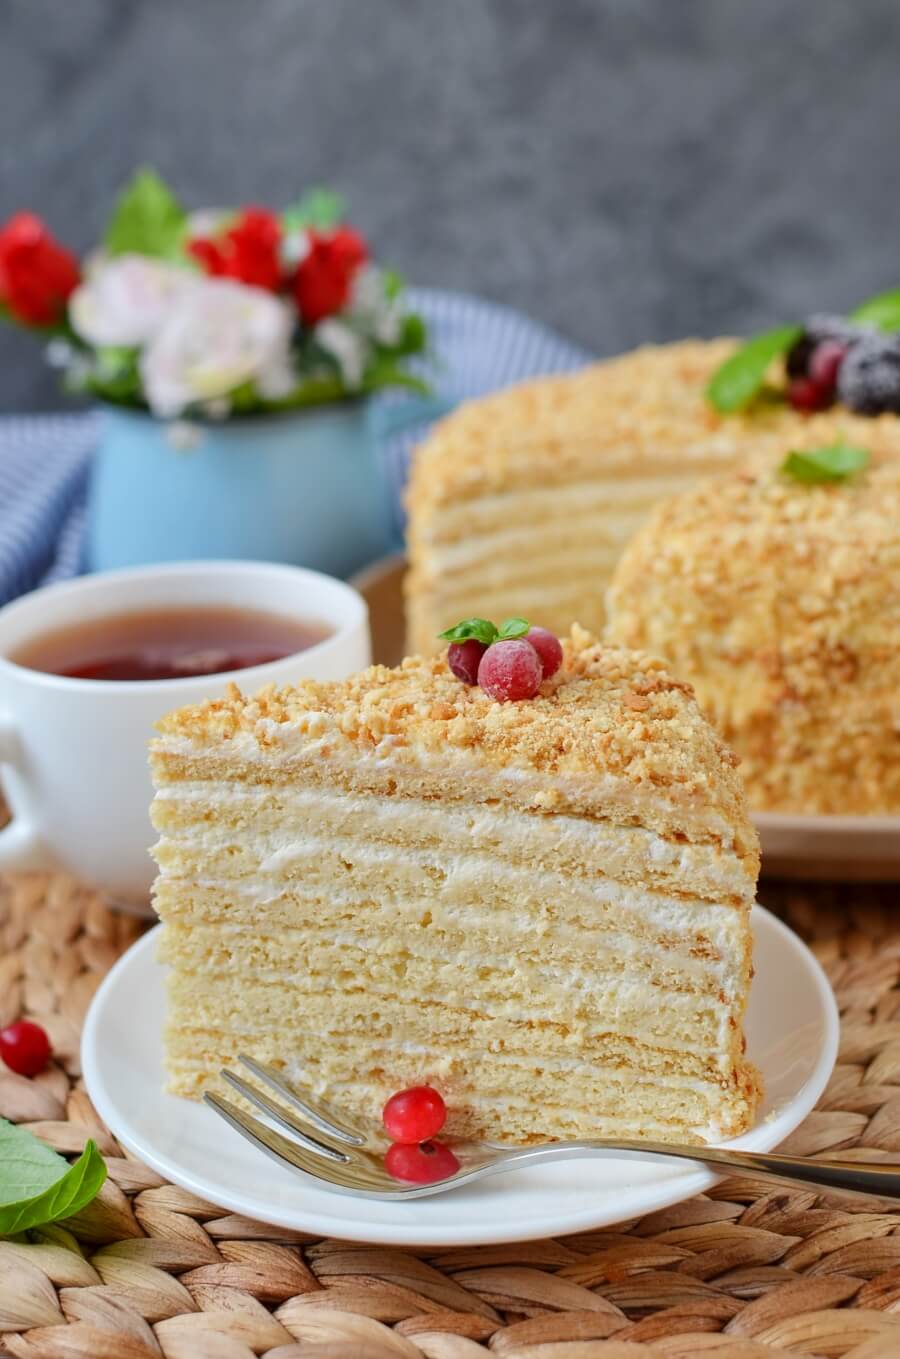 Russian Honey Cake (Medovik) Recipe - Cook.me Recipes